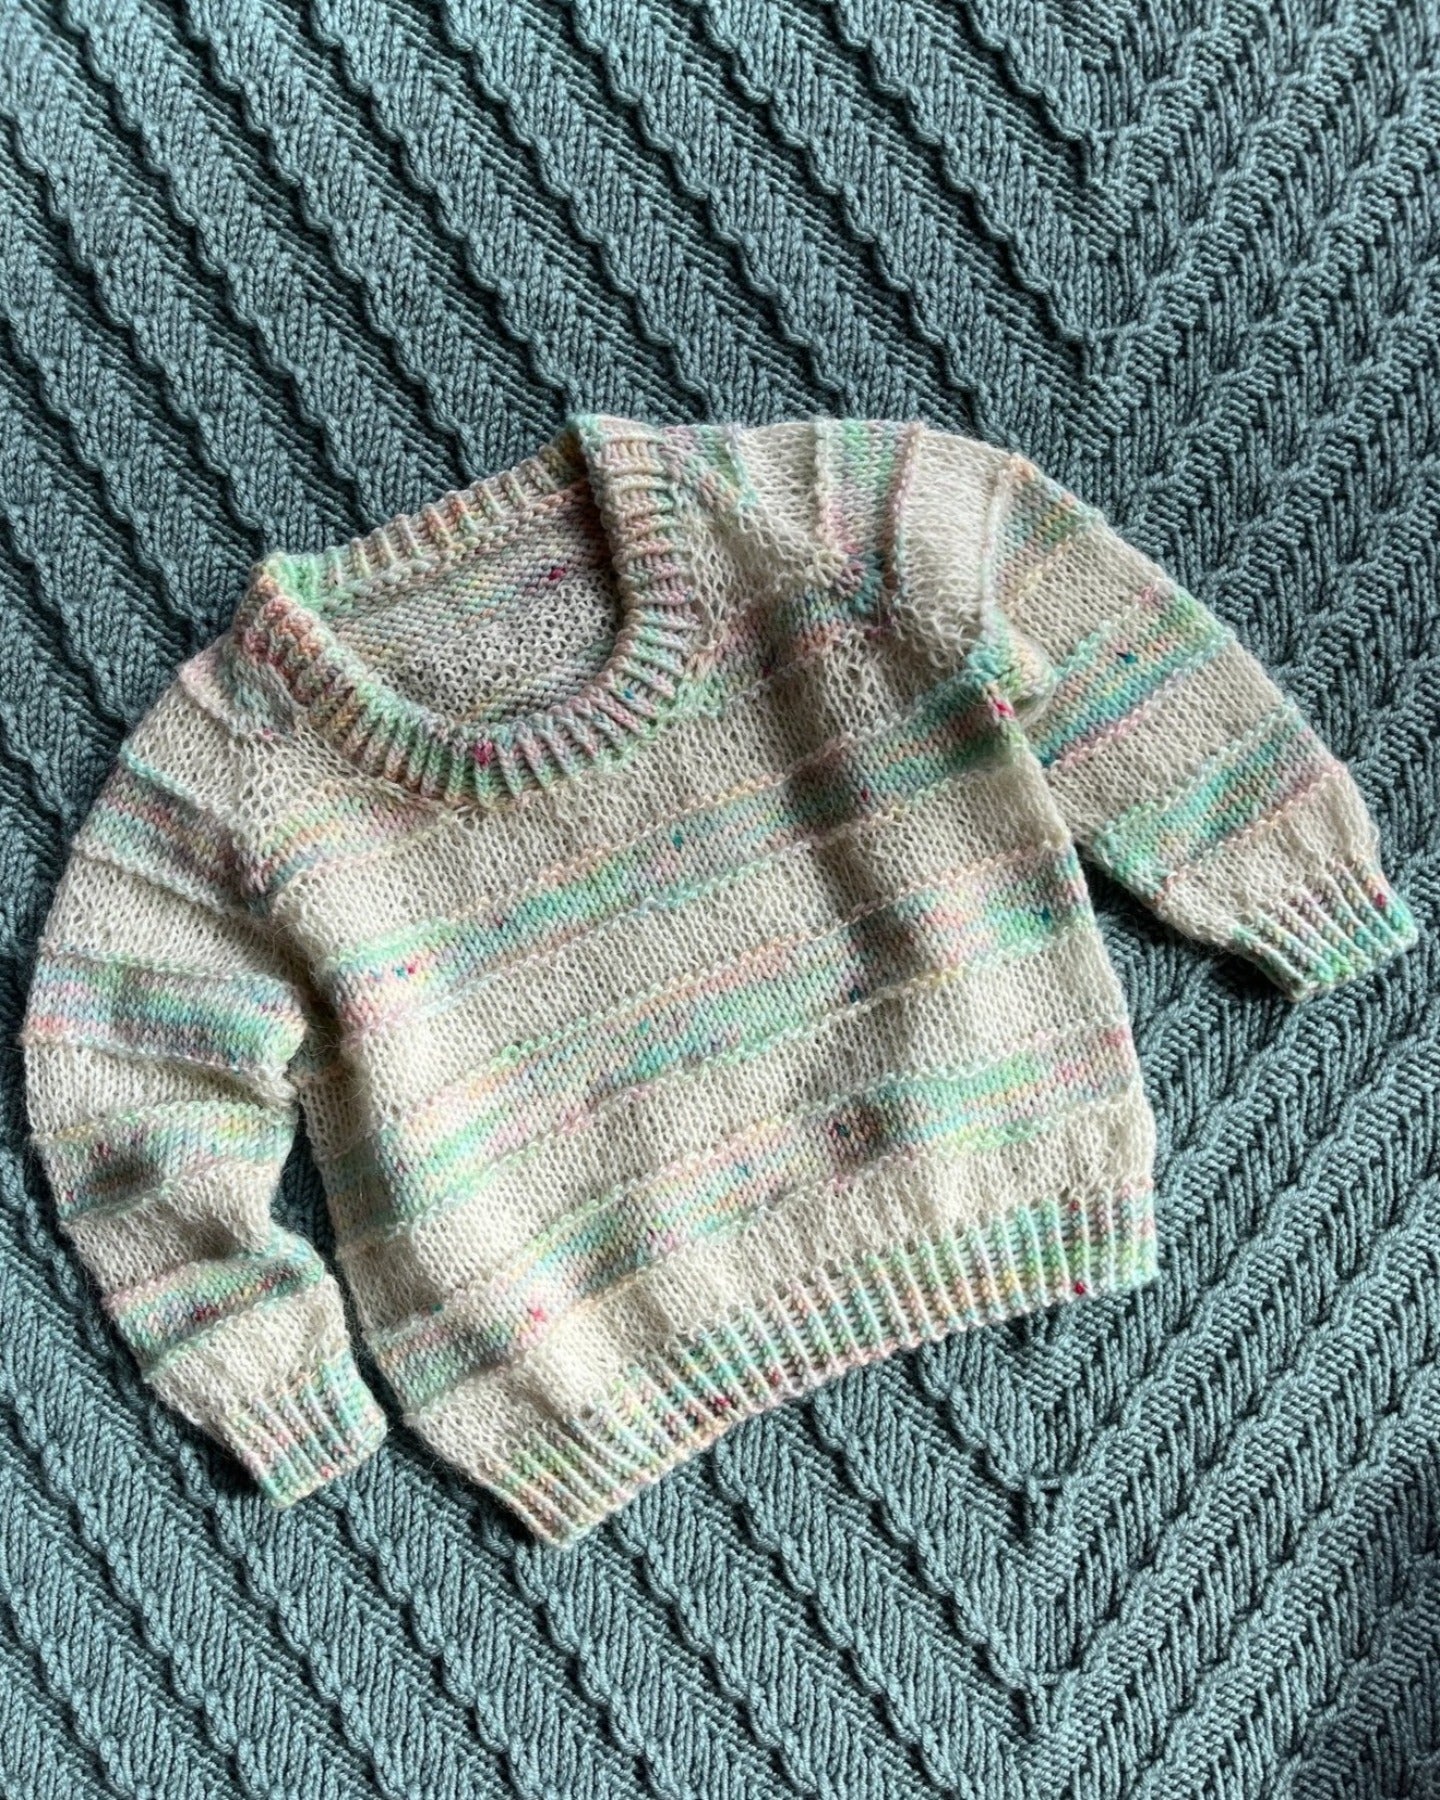 Straight Up Sweater Baby English Popknit knitting pattern